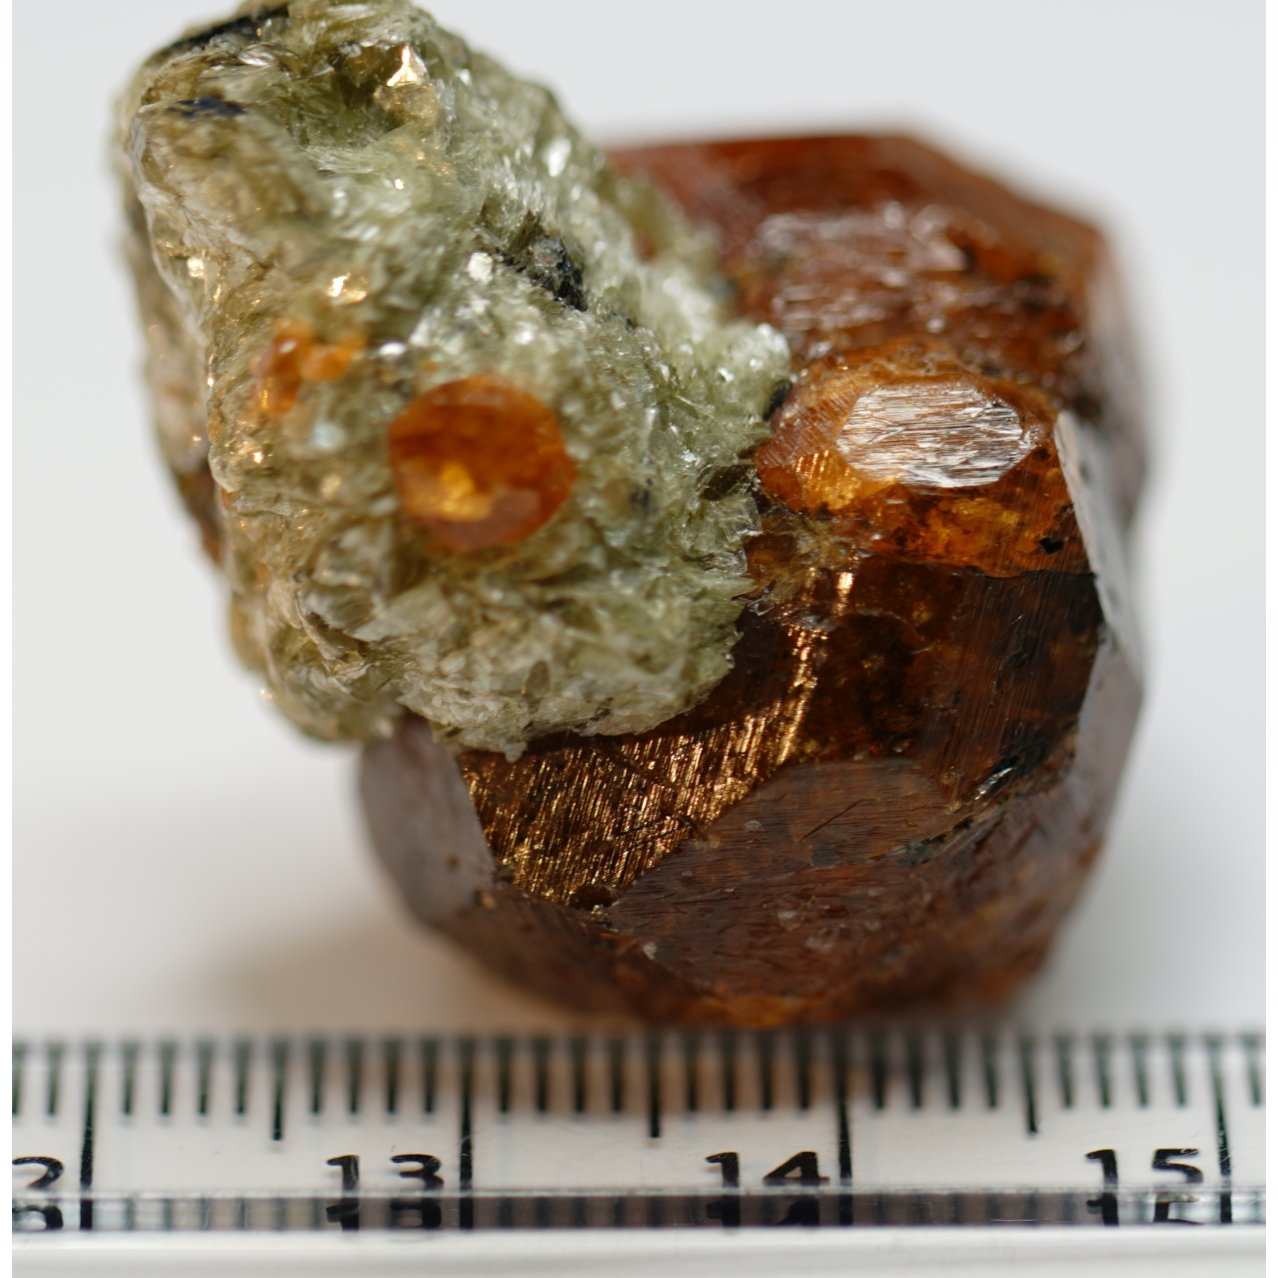 169.52Ct Spessartite Garnet Crystal On Matrix Loliondo Tanzania Untreated Unheated